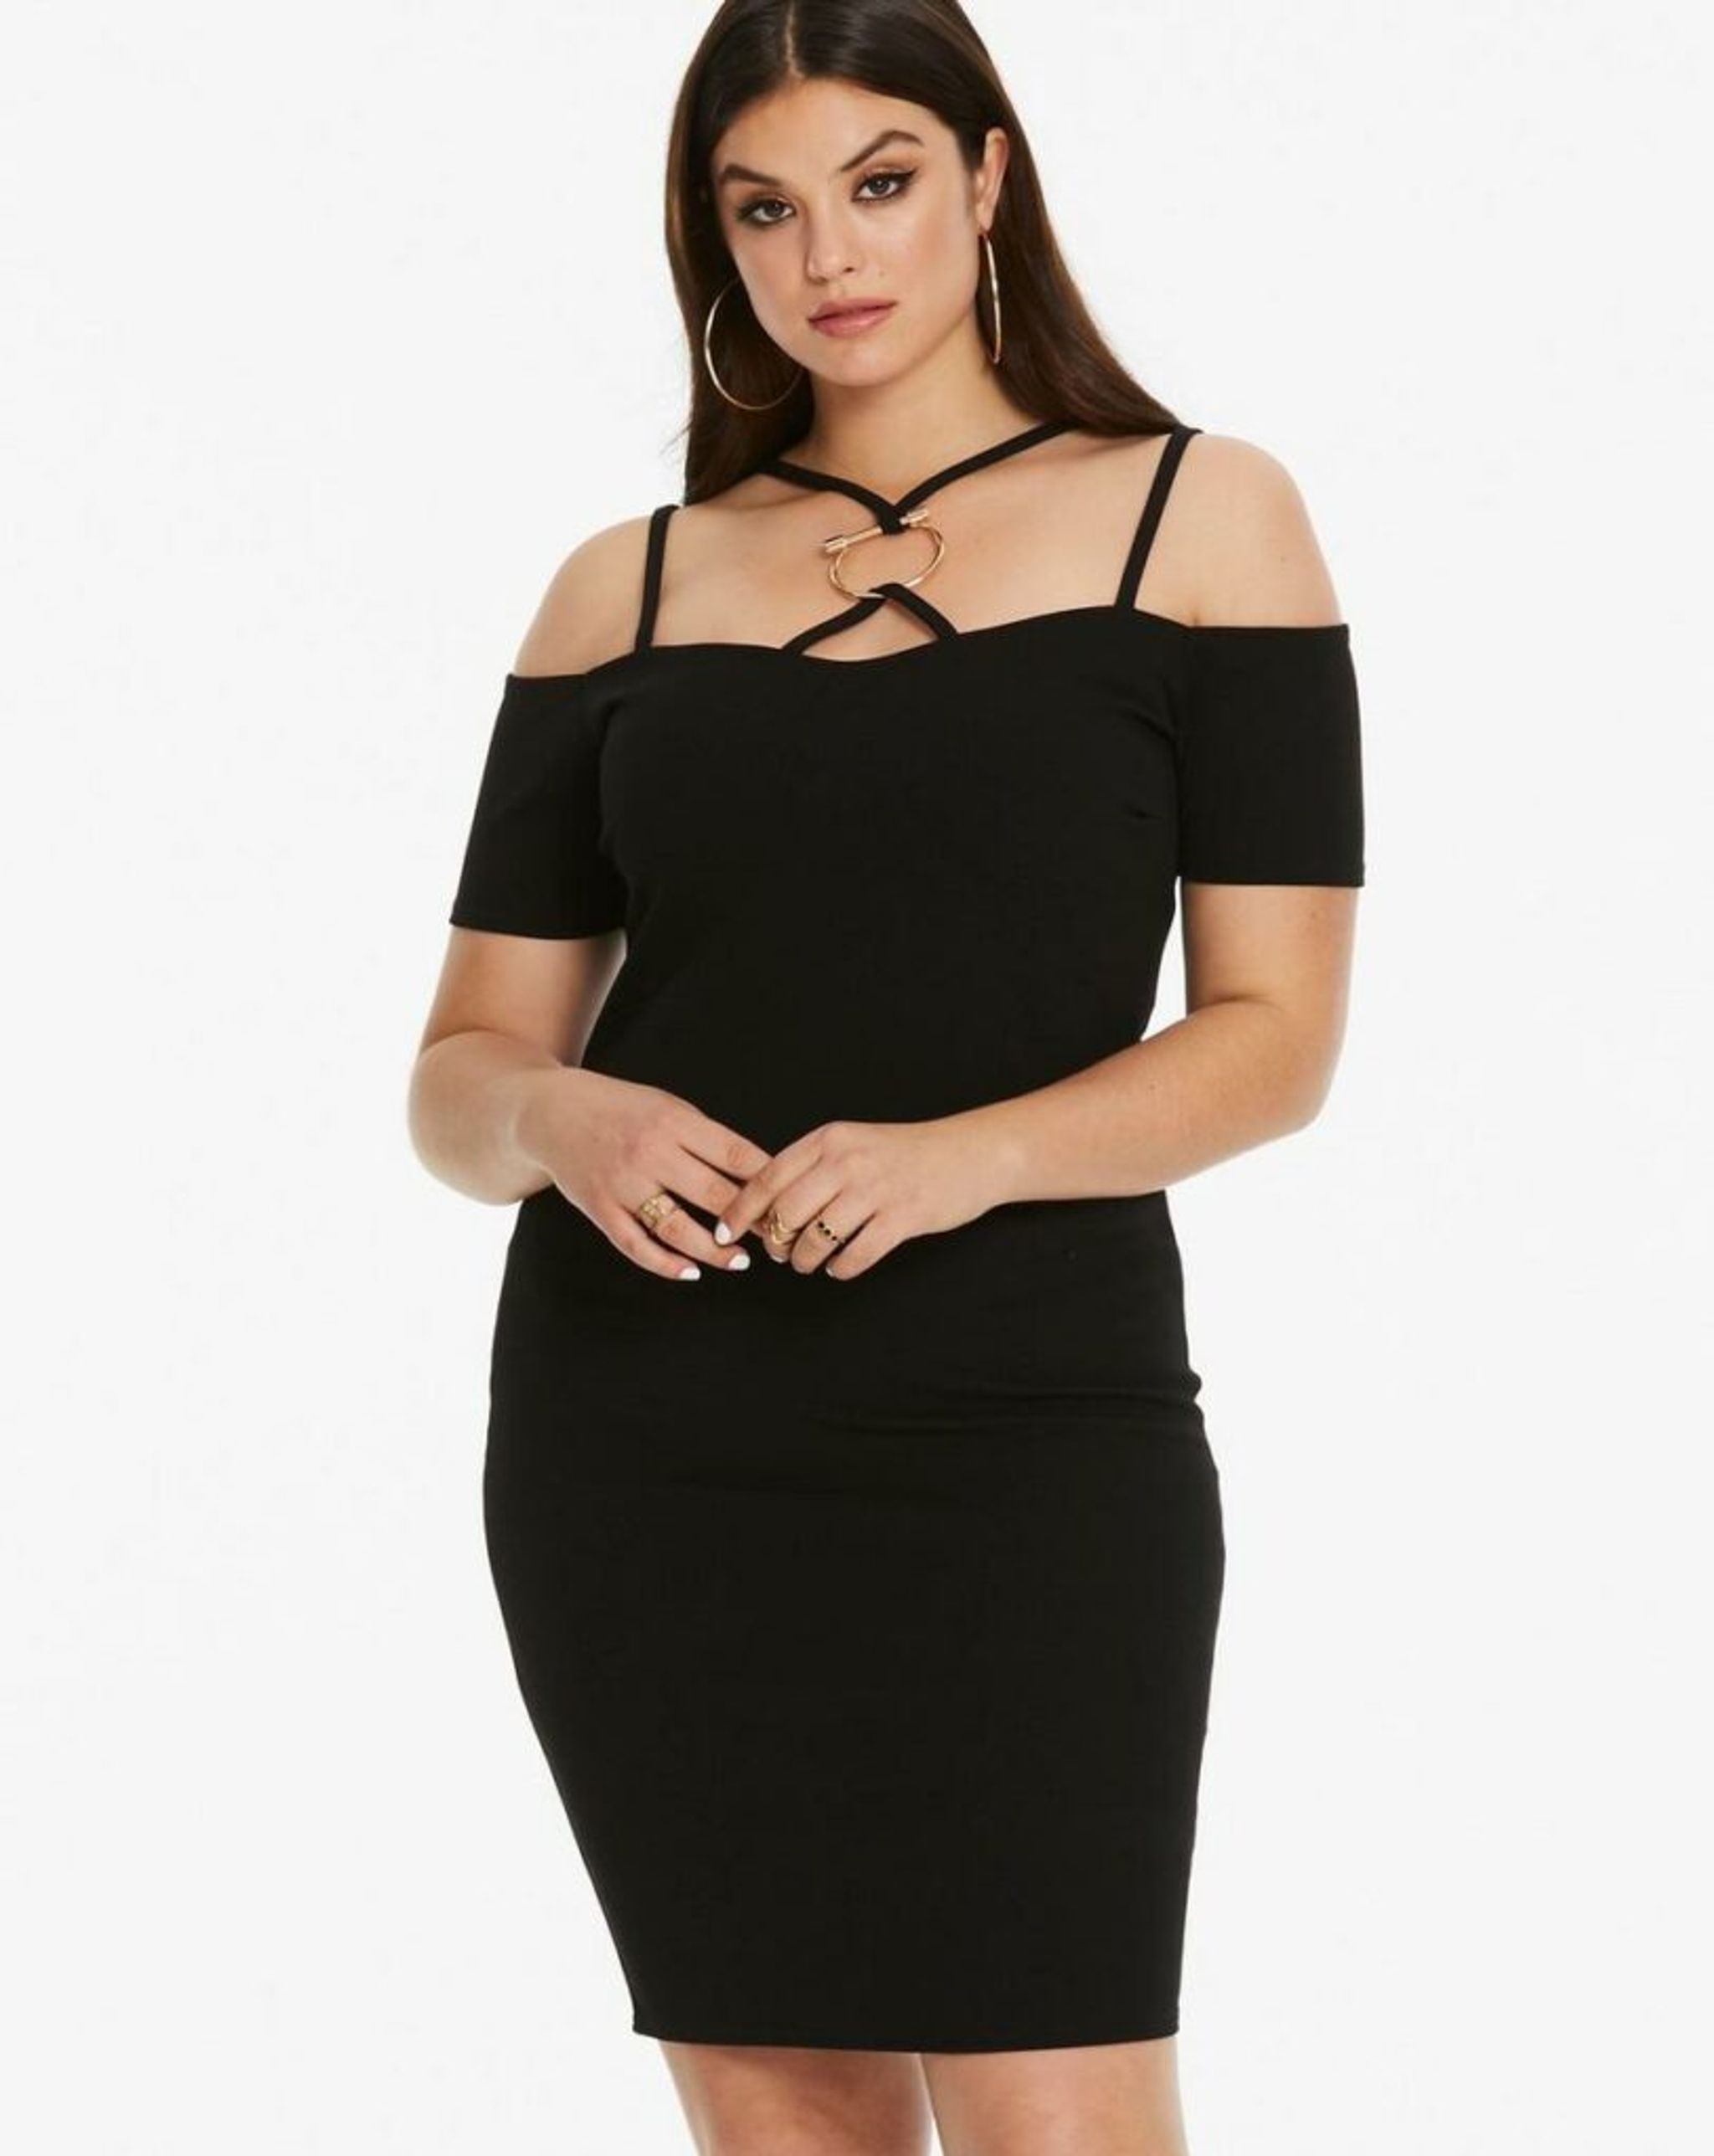 2019 Plus Size Dress for Women Summer Date Night Ideas Cute & Cheap